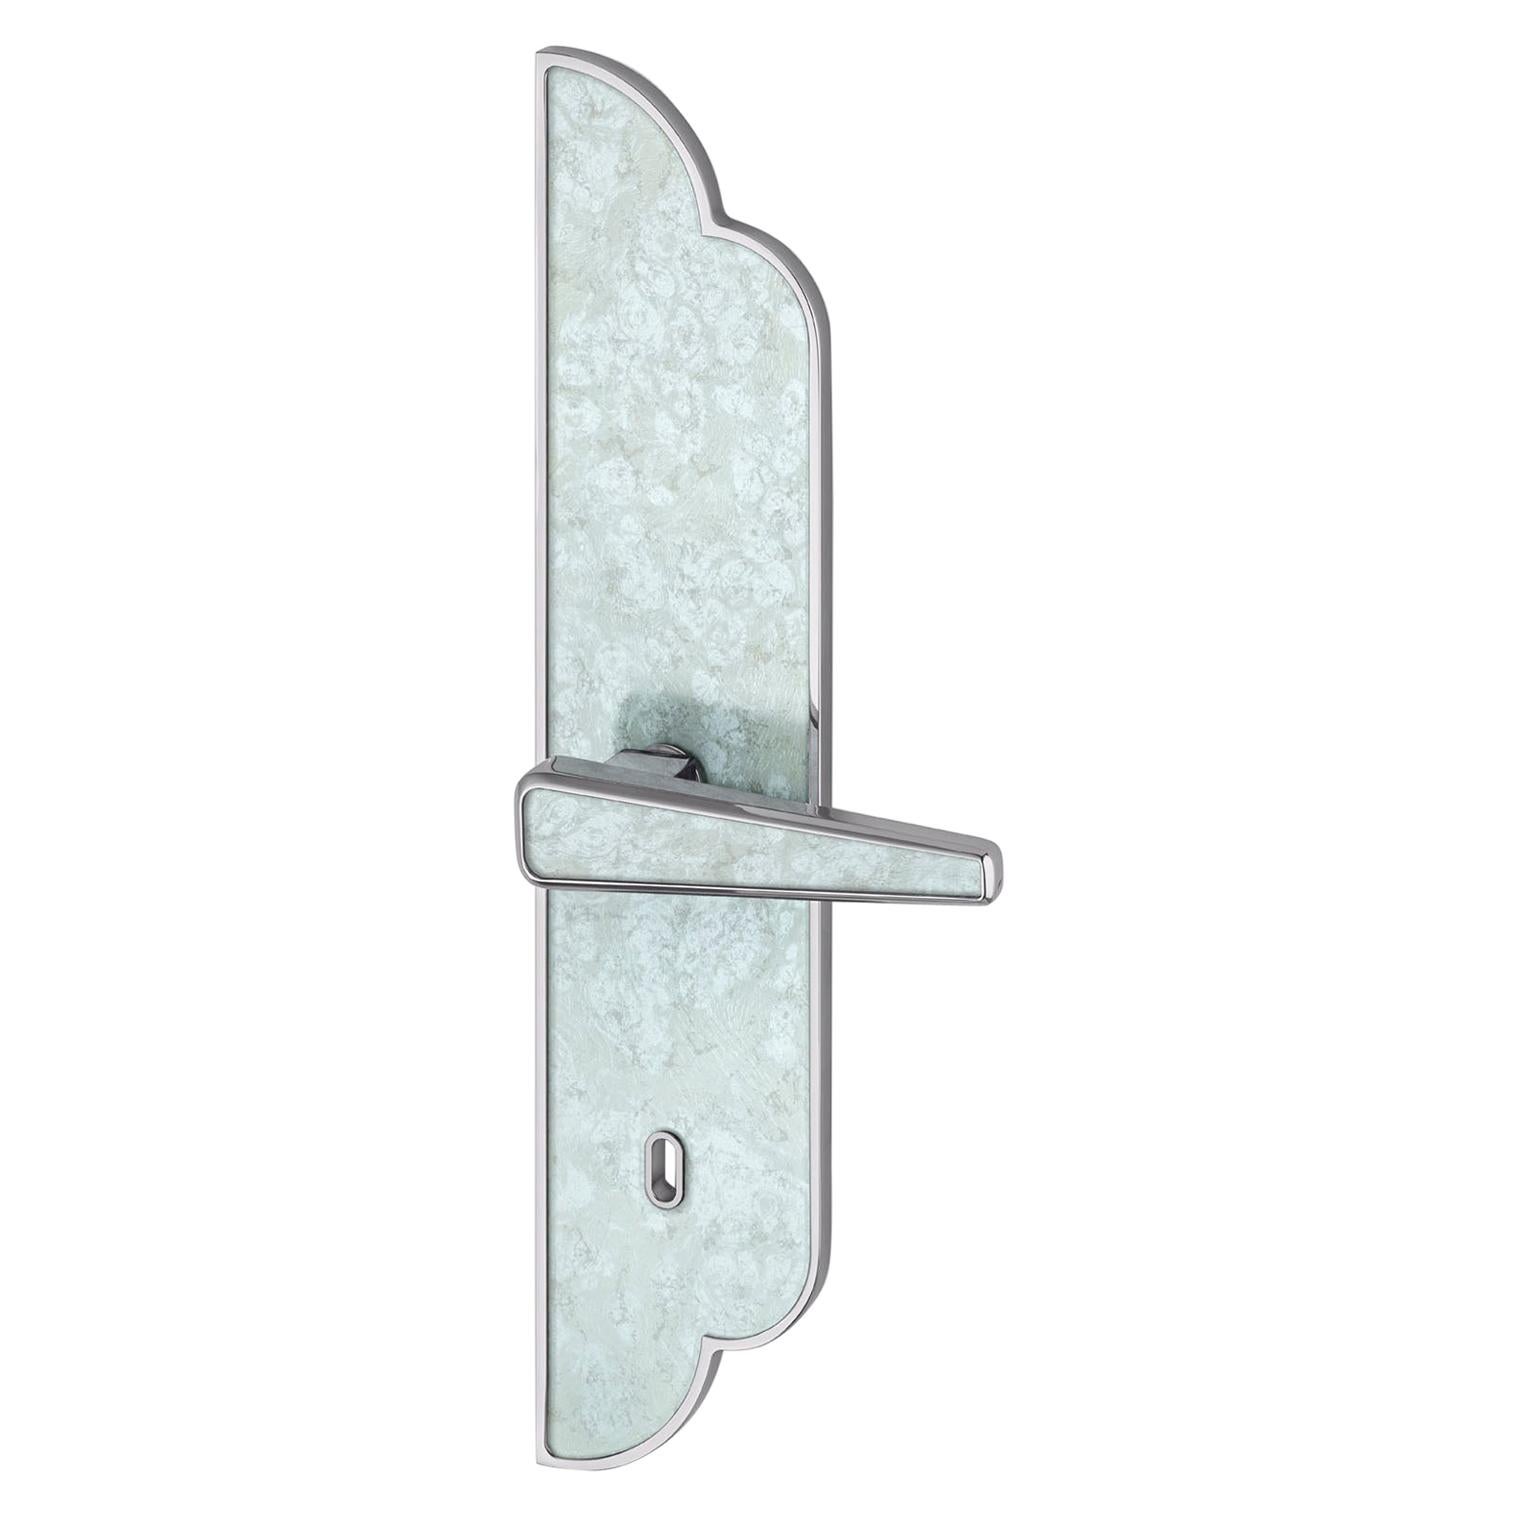 Door Handle Aluminum Plate Brass Handle Body Polished Chrome Vetrite Insert